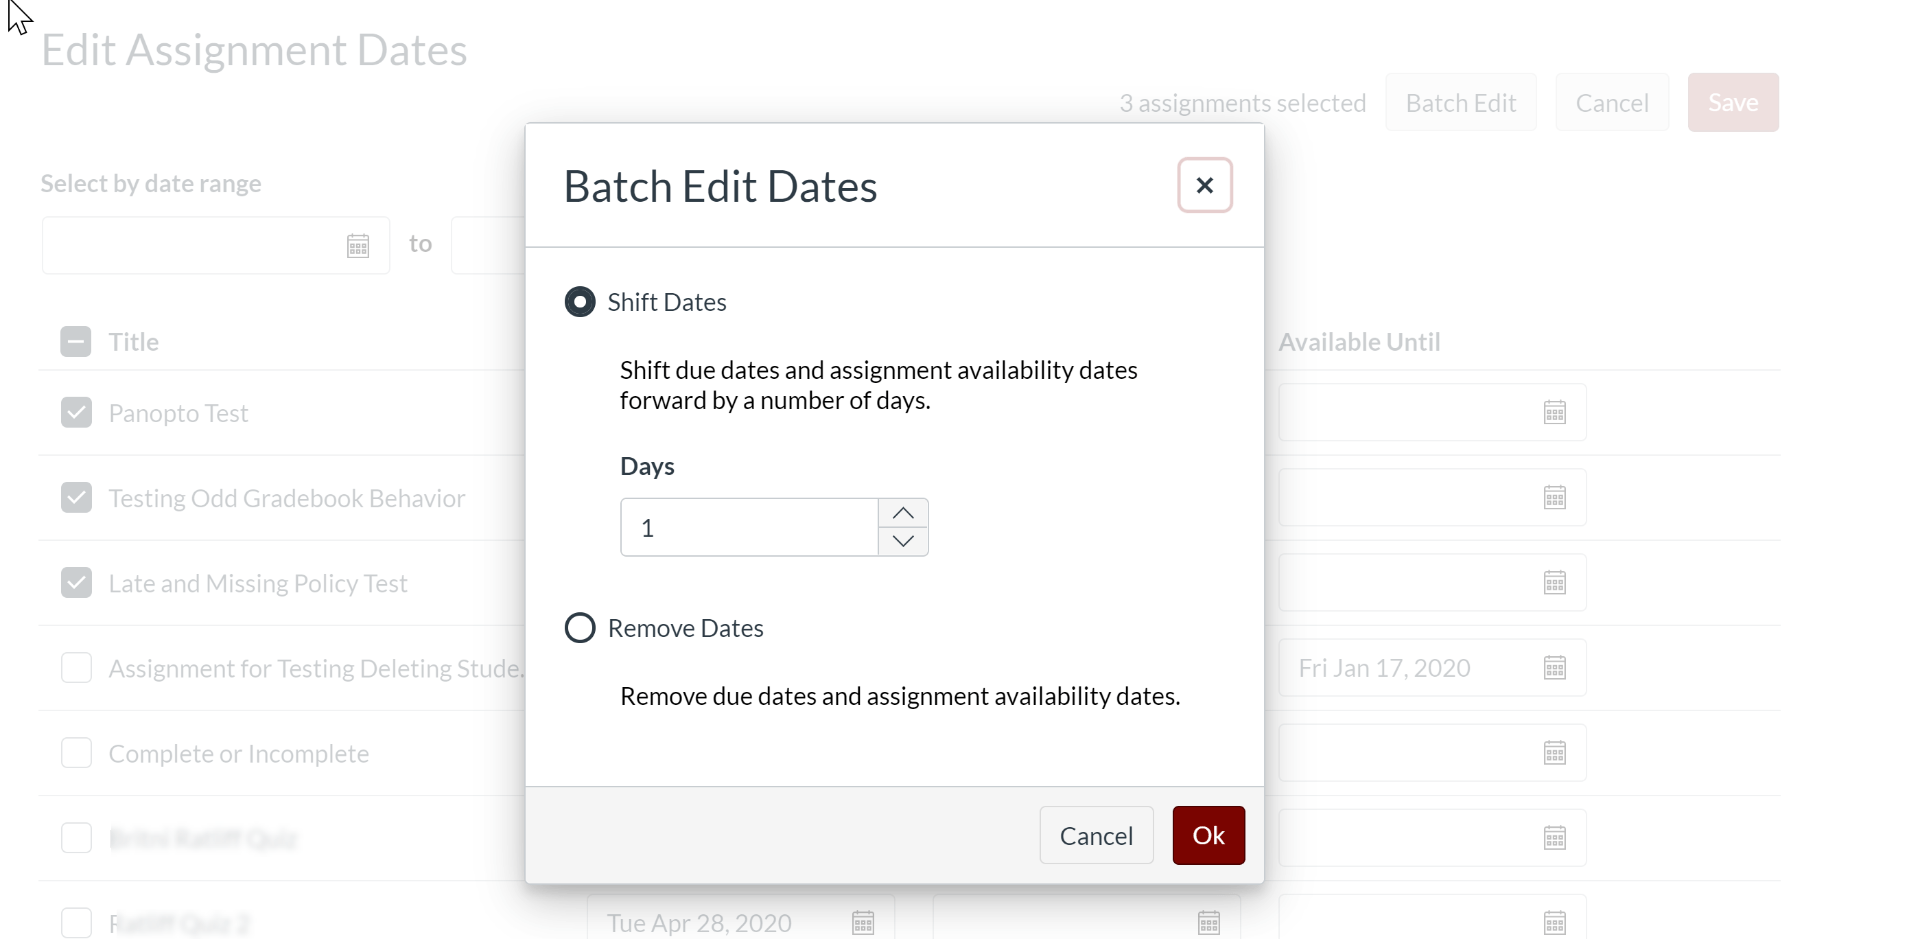 Batche Edit Dates dialog box